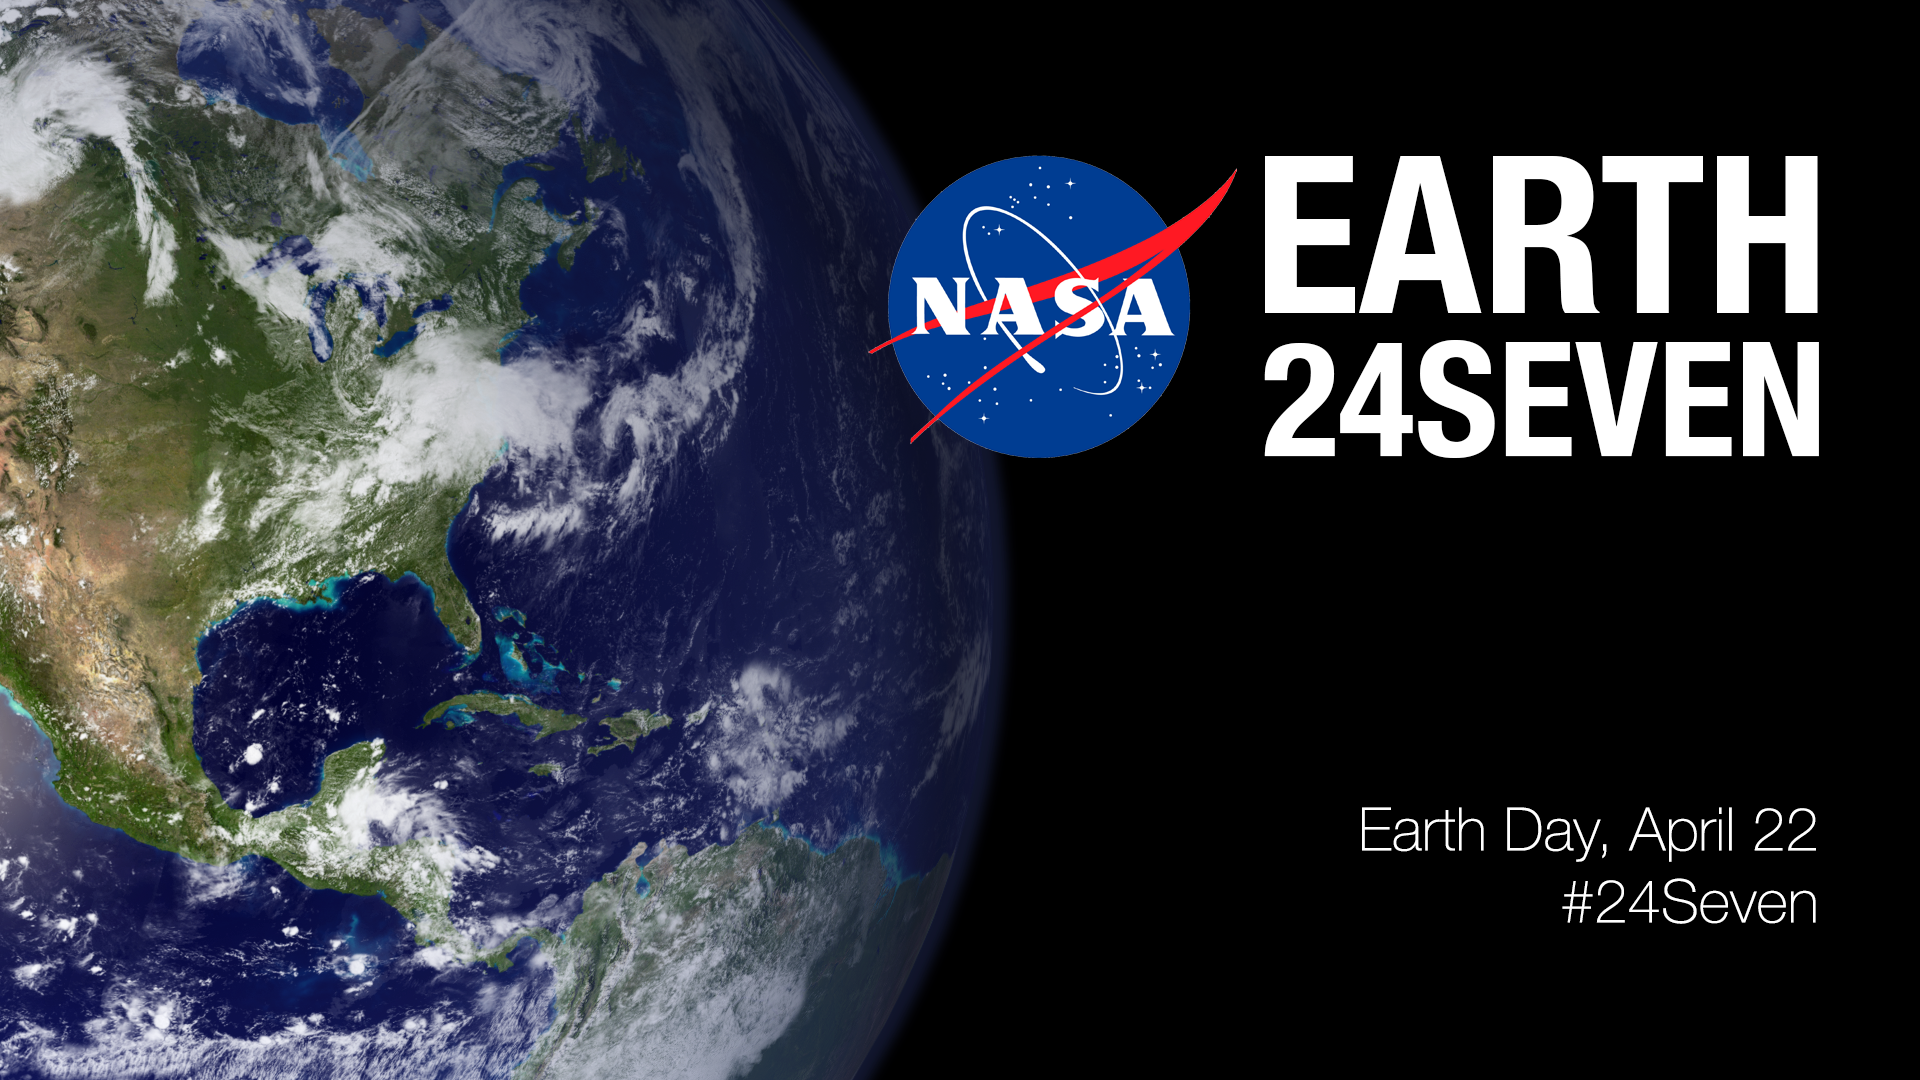 NASA #24Seven Social Media Event